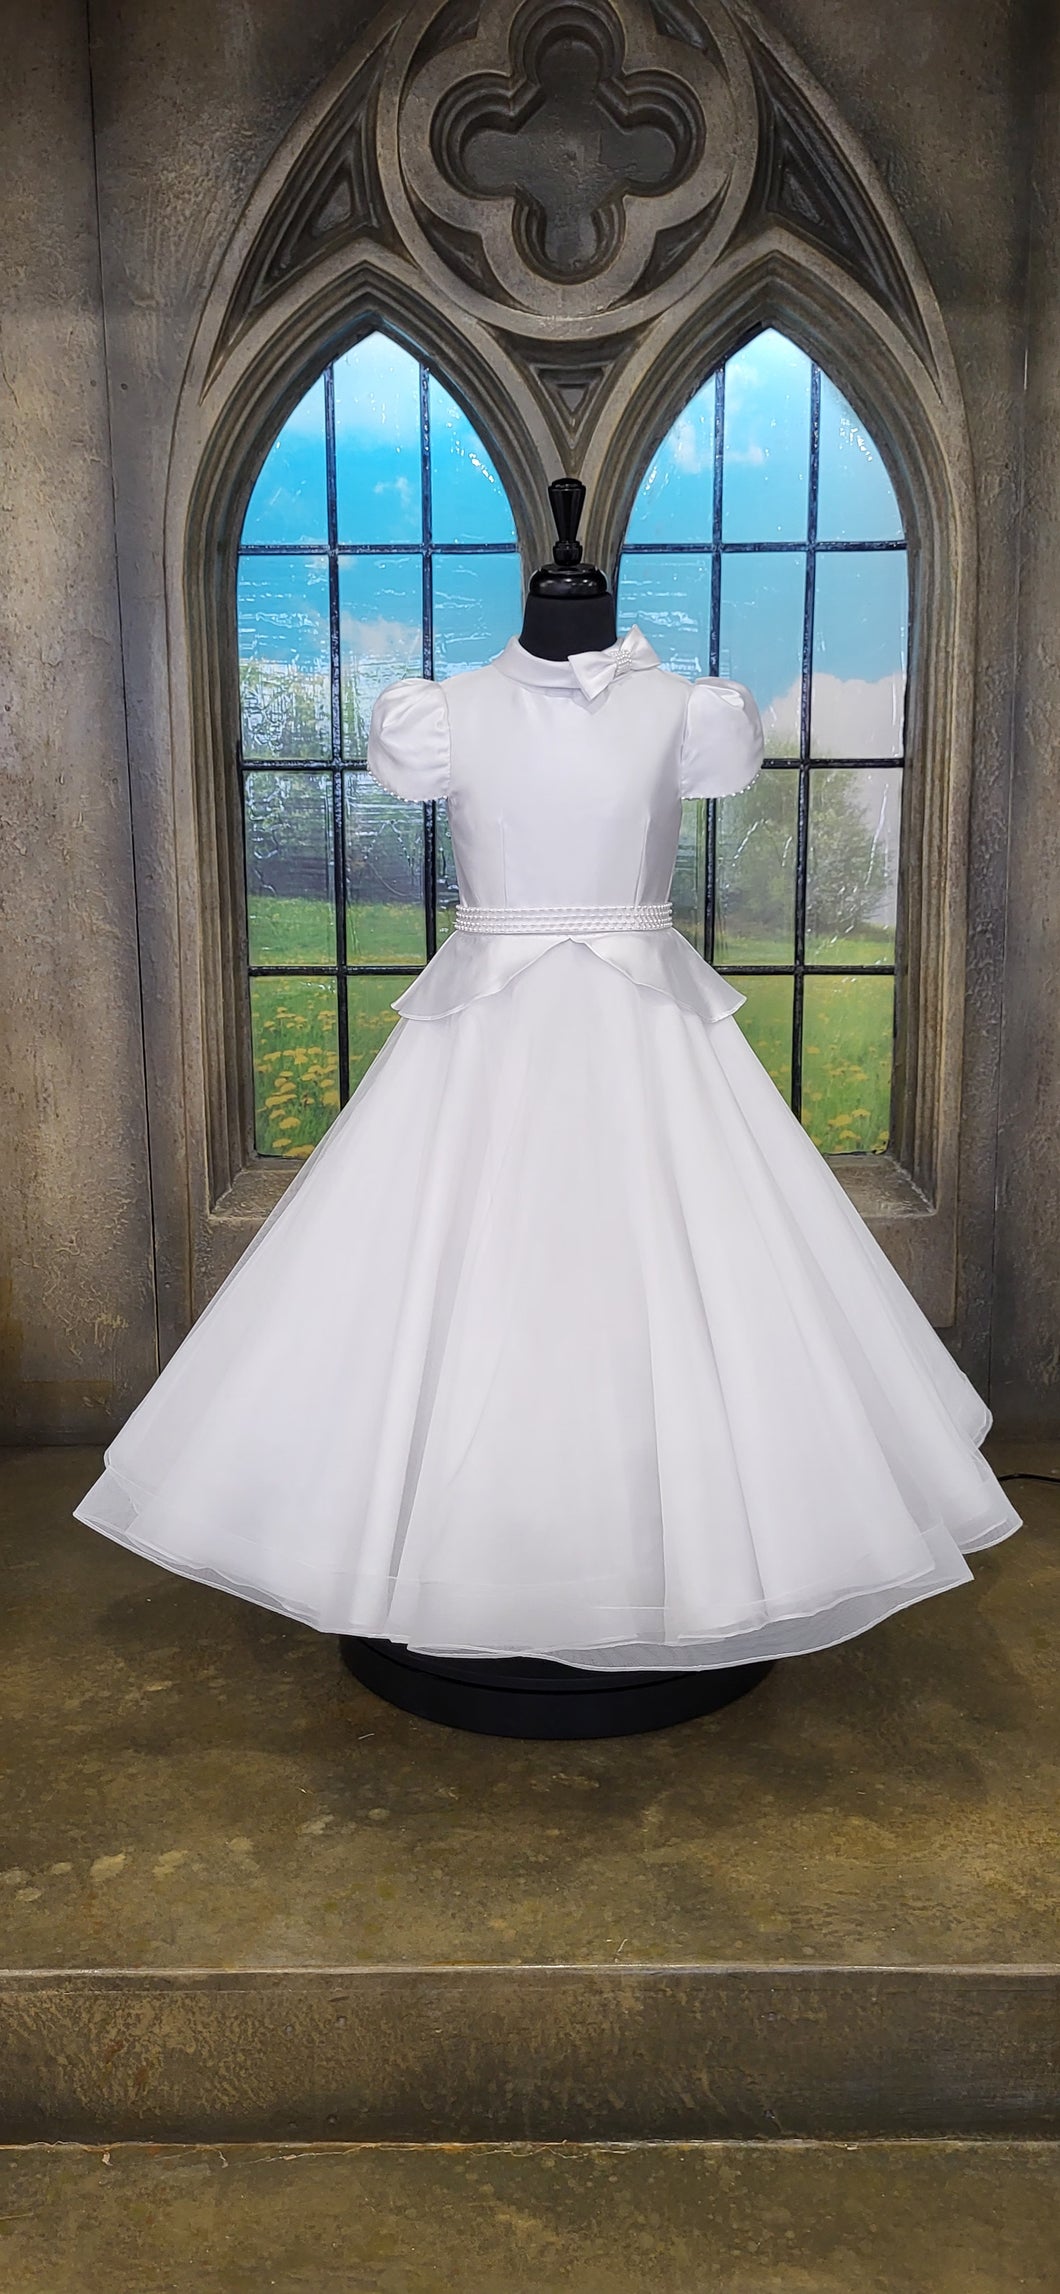 SALE COMMUNION DRESS Isabella Girls White Communion Dress:- IS23445 Age 8 & 9